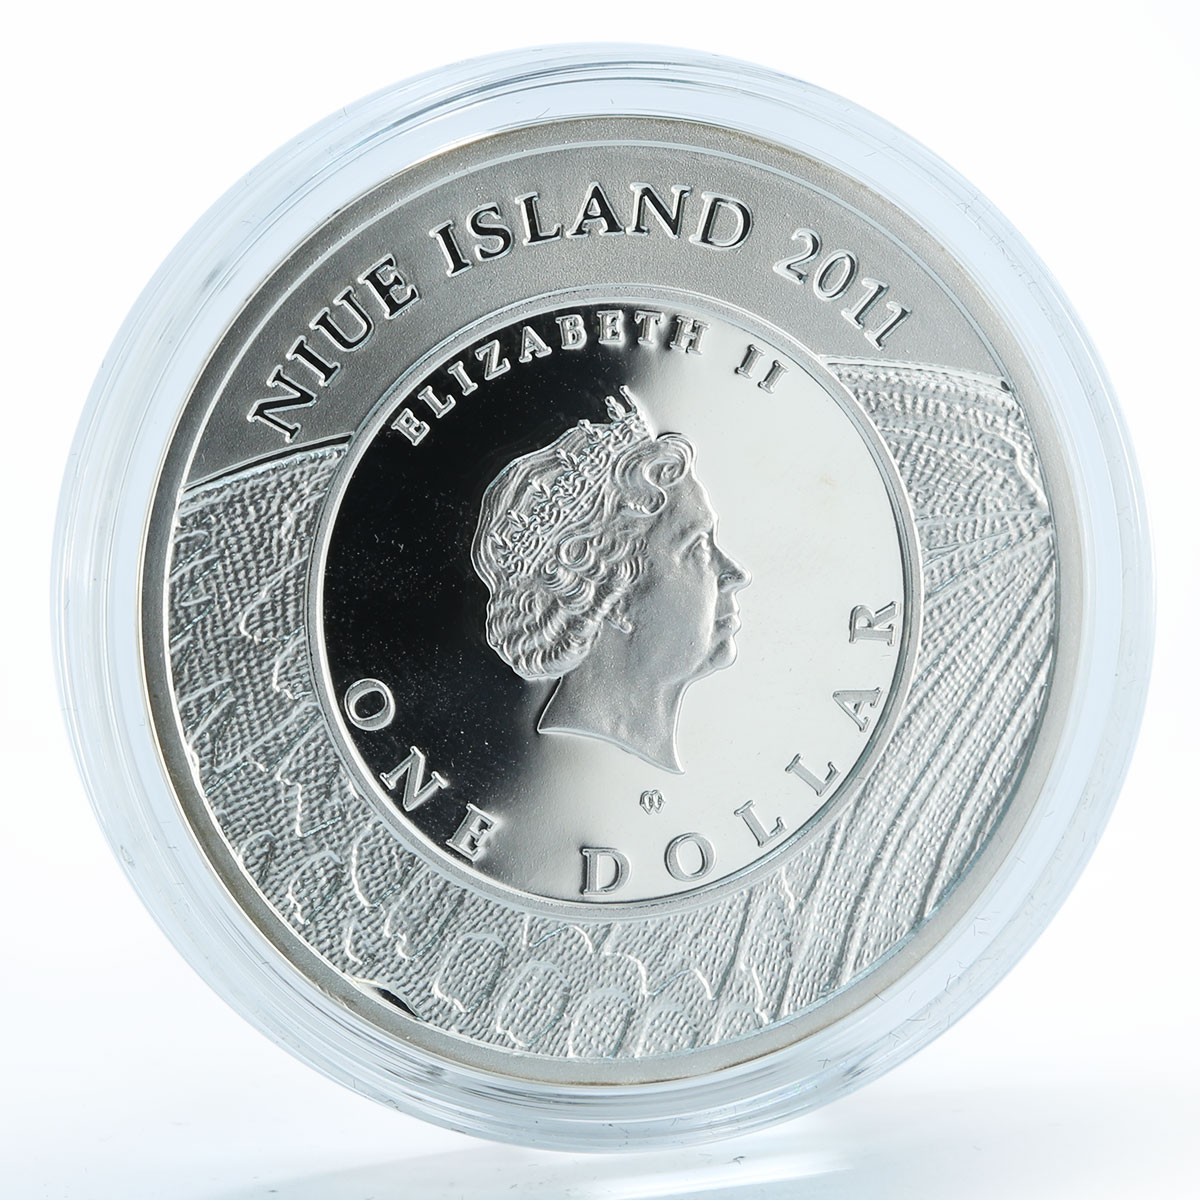 Niue 1 dollar butterflie Maculinea Arion silver color coin 2011